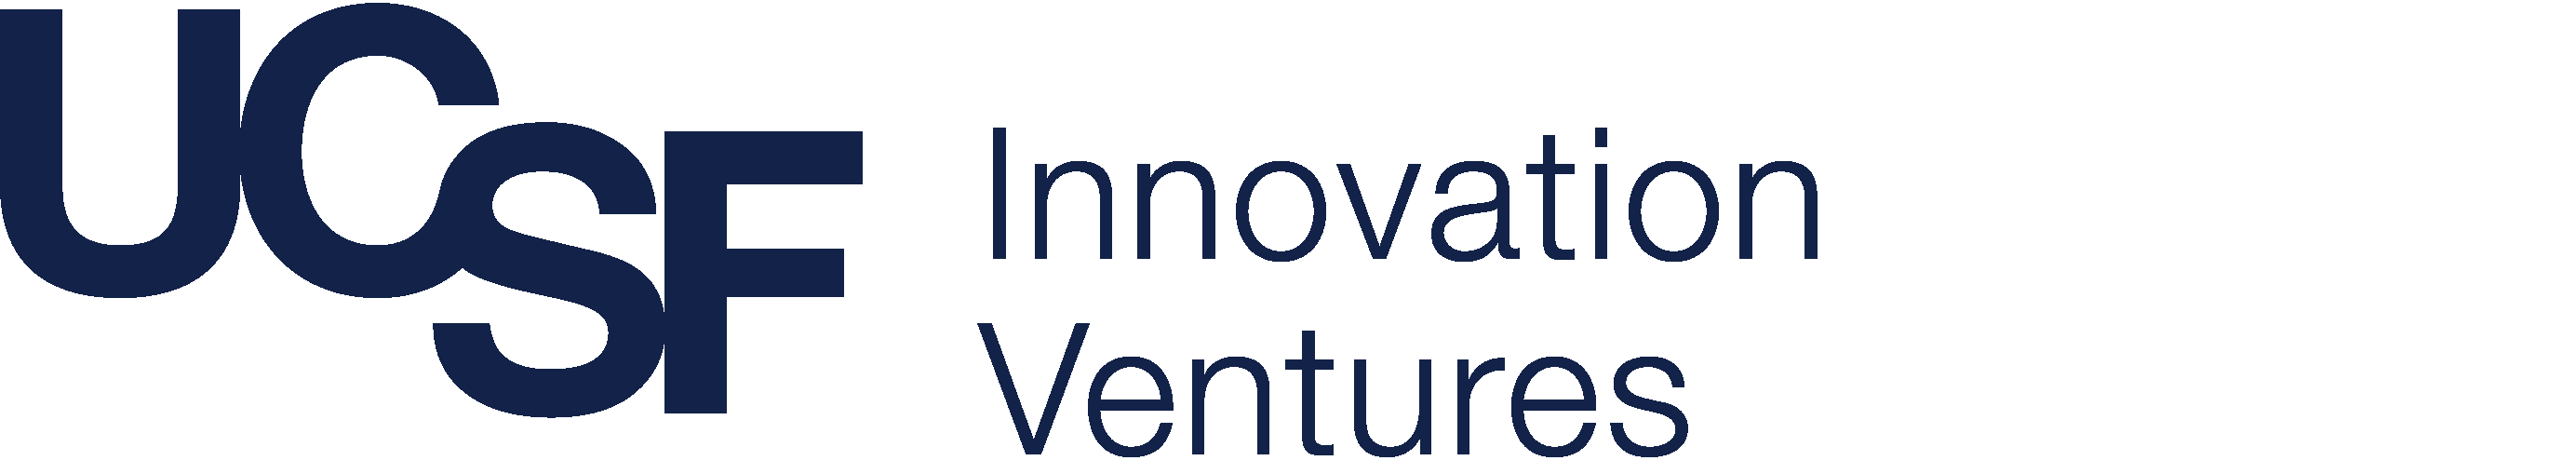 UCSF Innovations Venture Logo